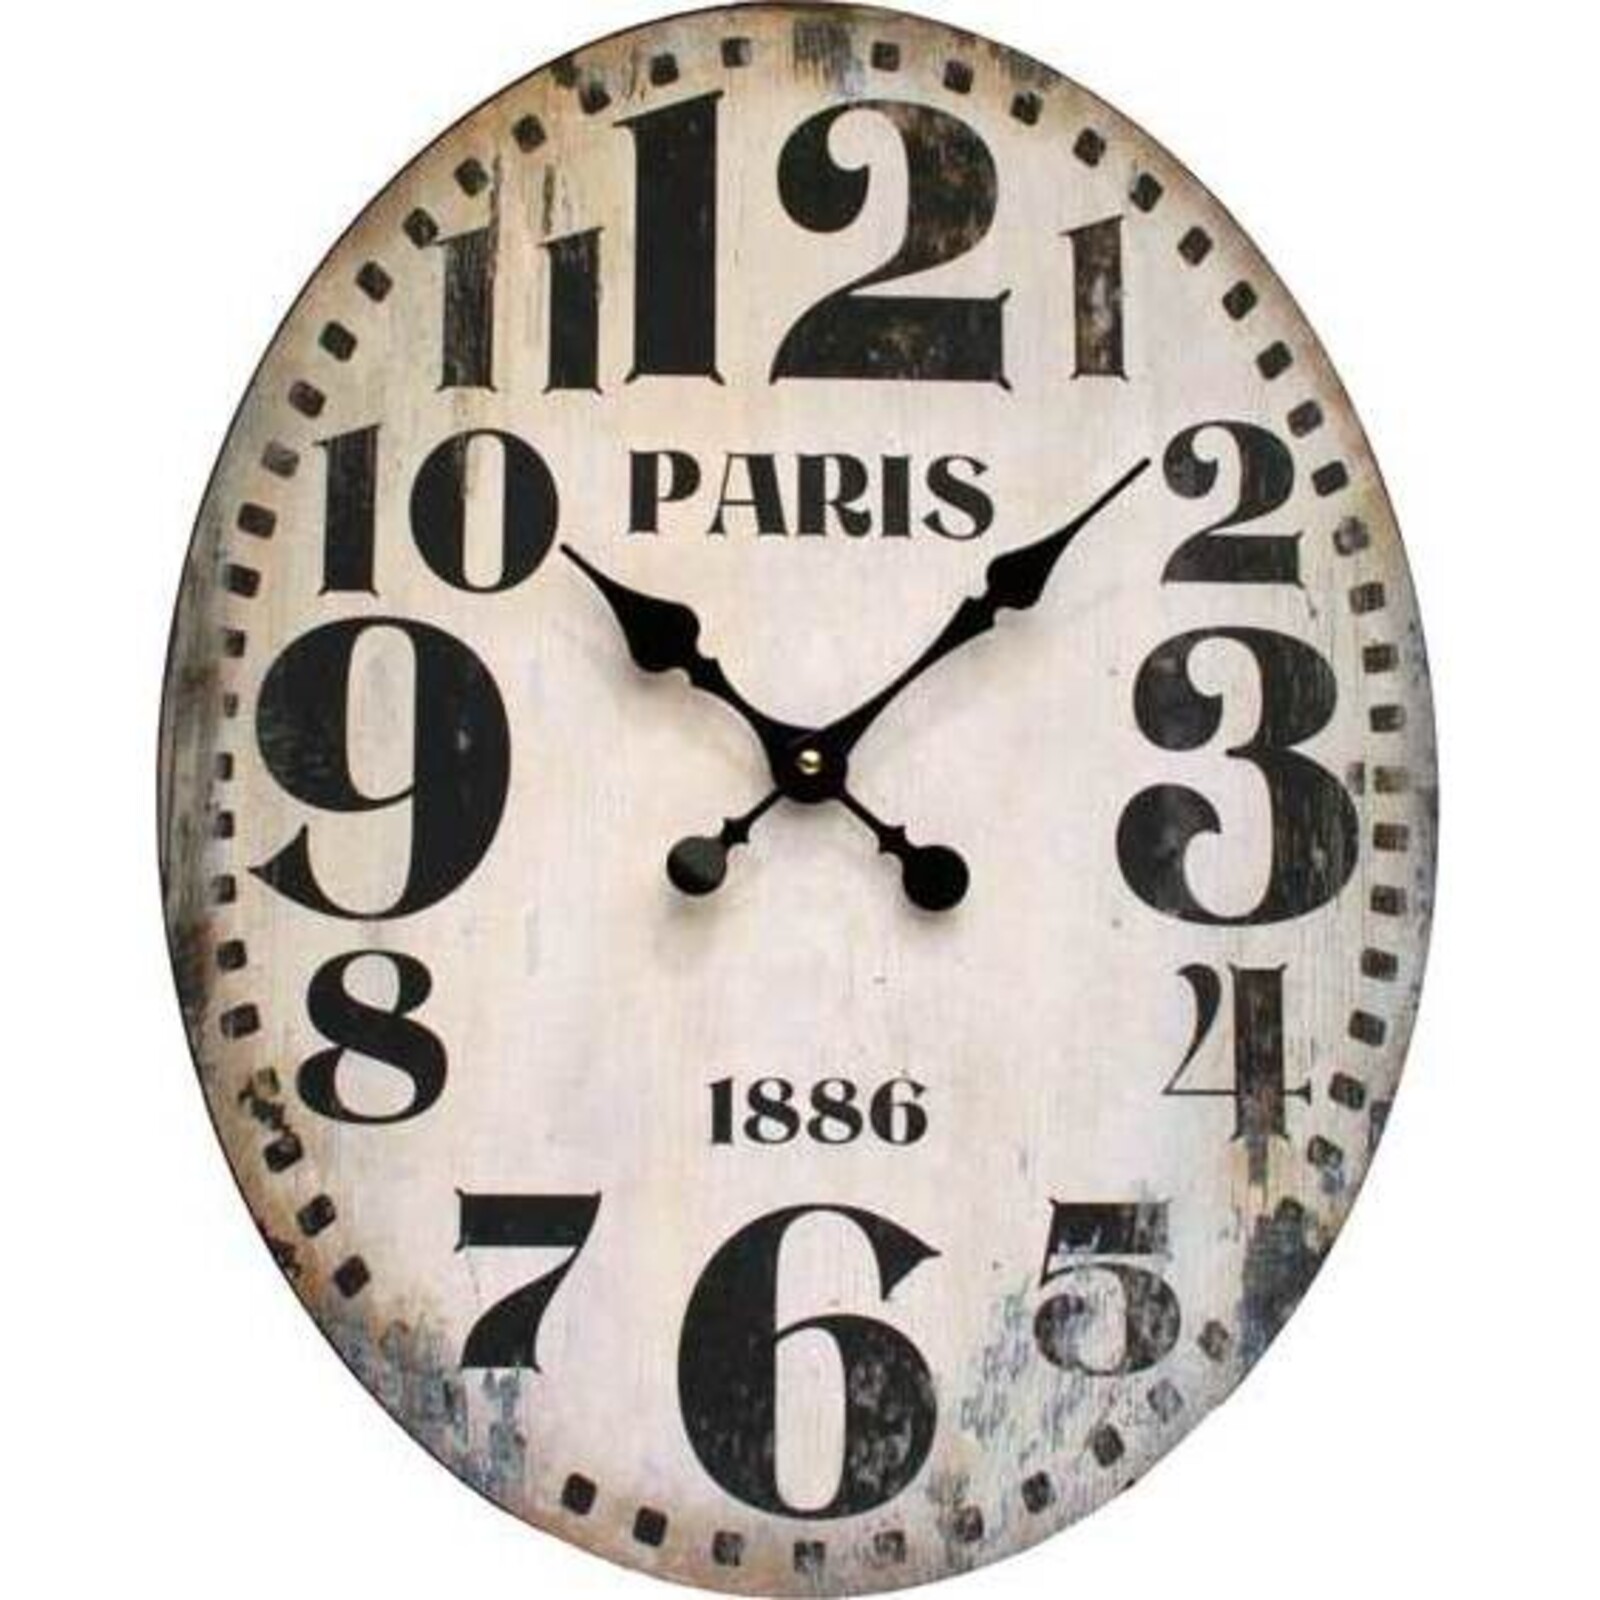 Oval Clock Paris 1886